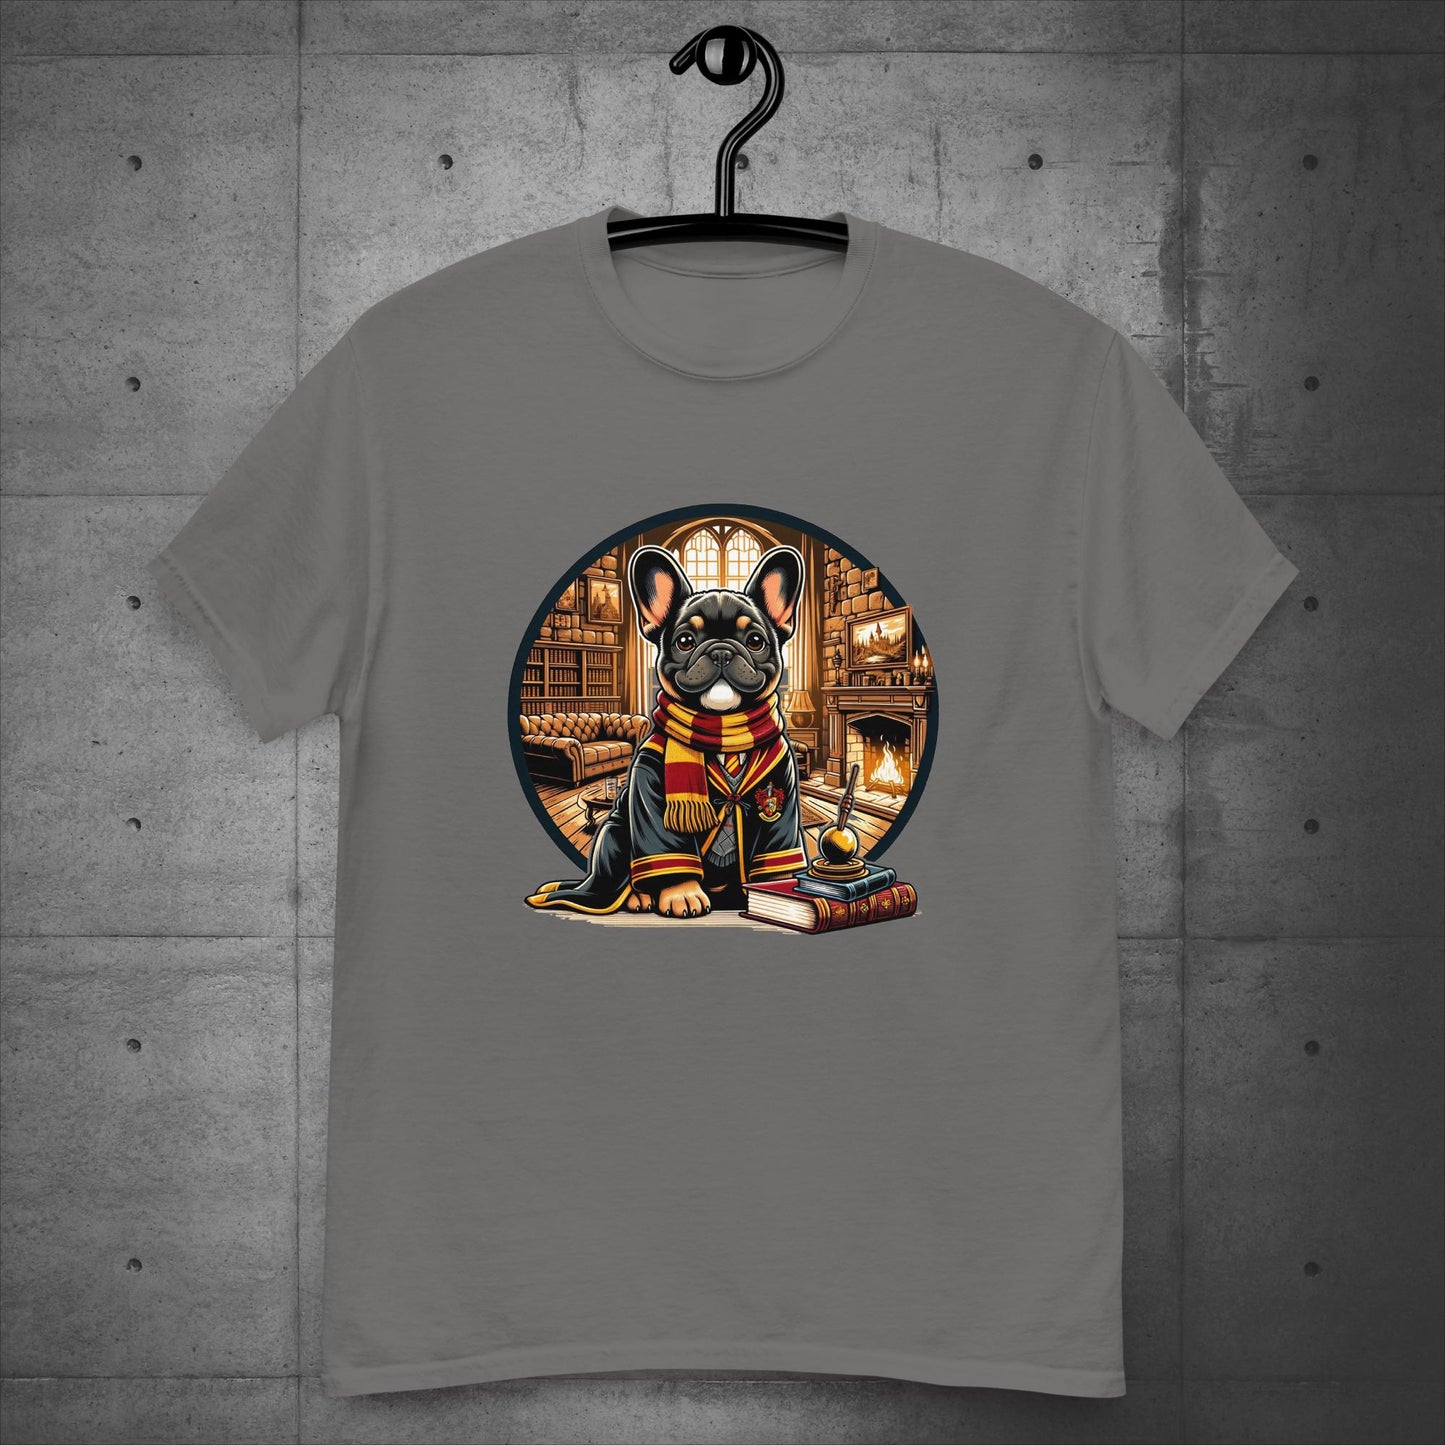 Unisex "Gryffindor Frenchie" T-Shirt